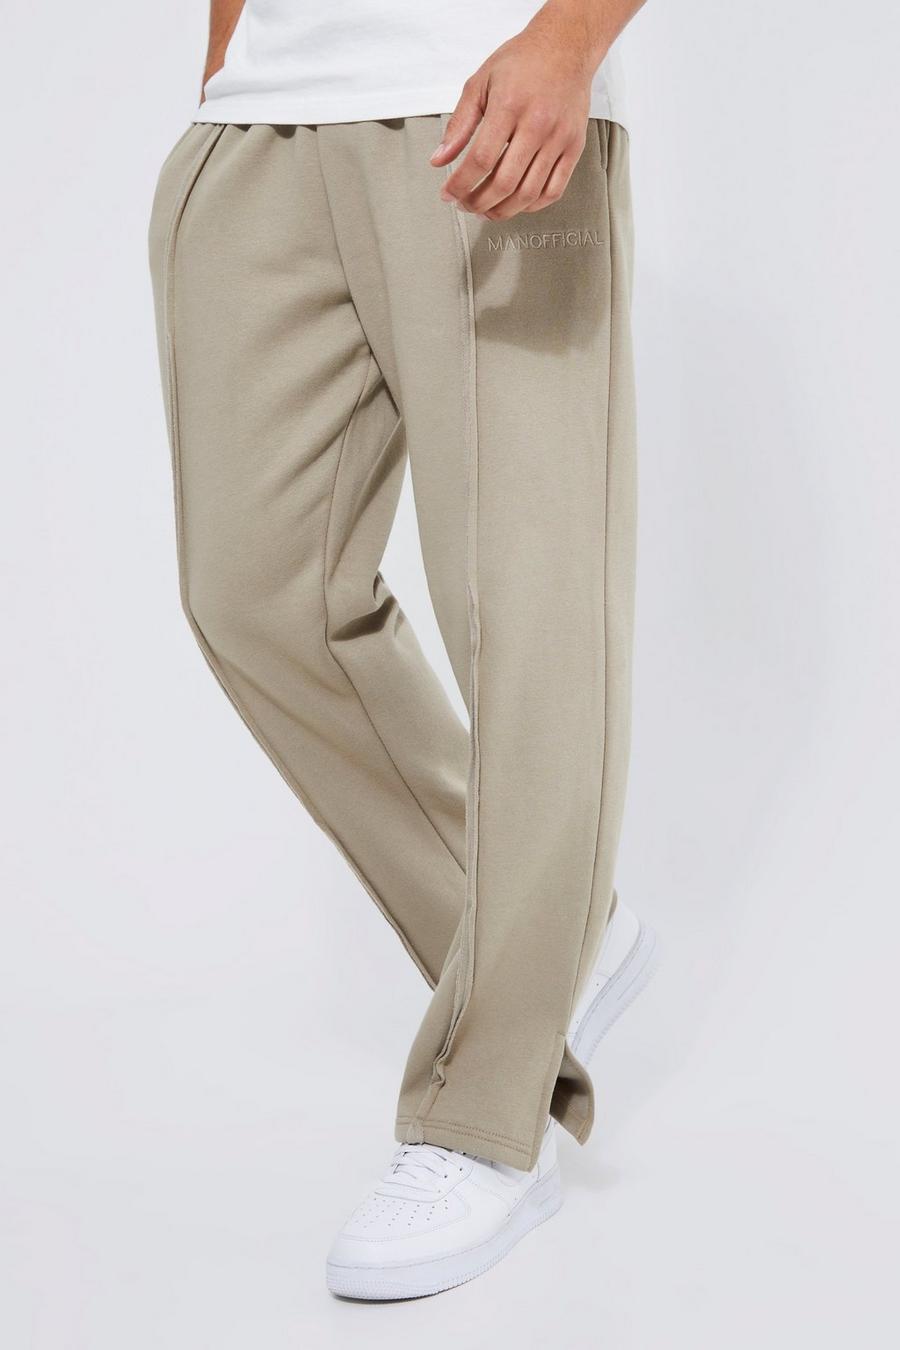 Maje Solid Tan Sweatpants Size 34 (FR) - 77% off